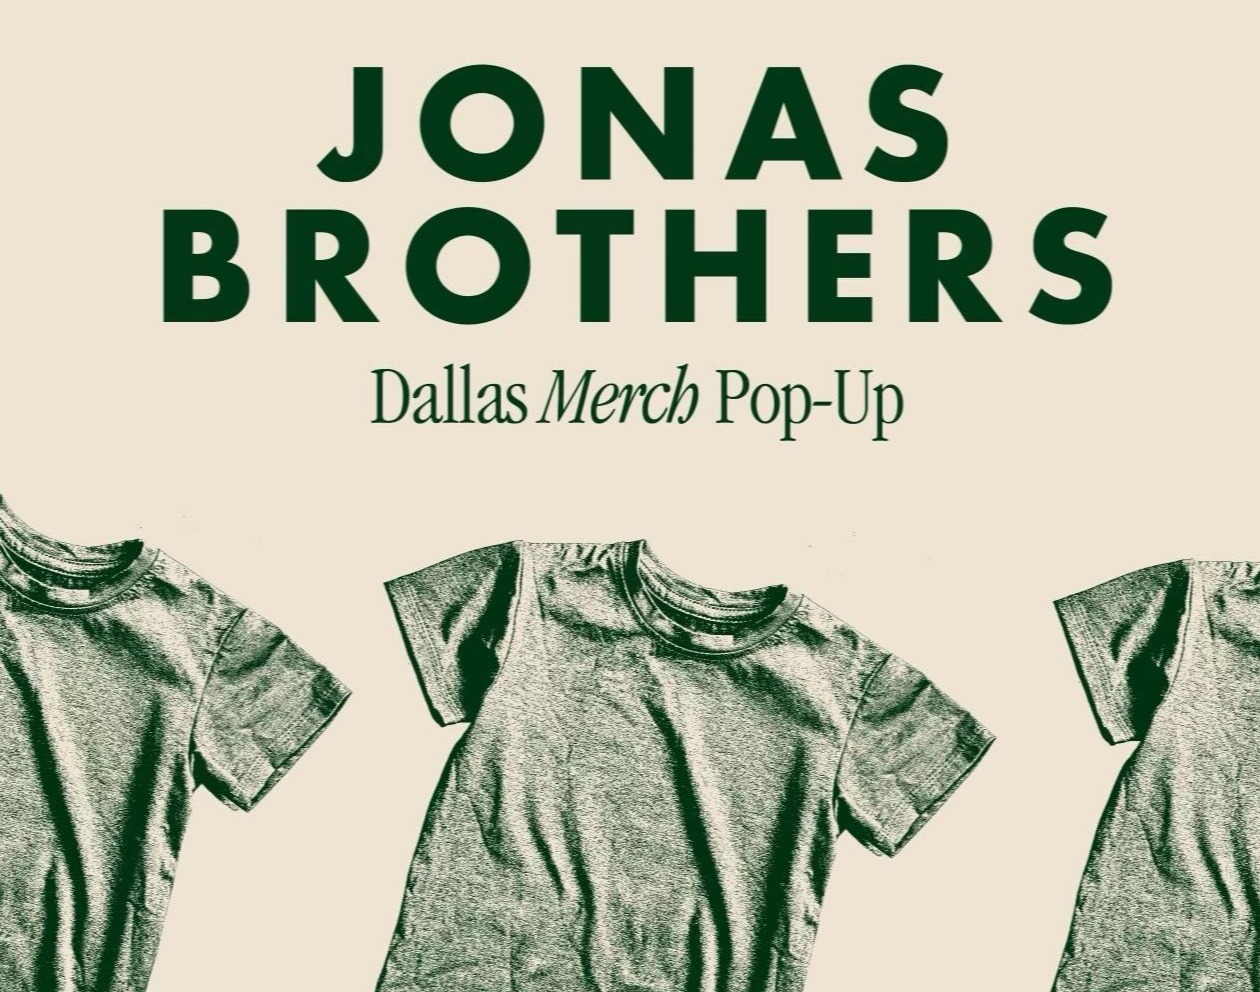 Centre Bishop Arts to Host Exclusive Jonas Brothers Merch Pop-Up Event